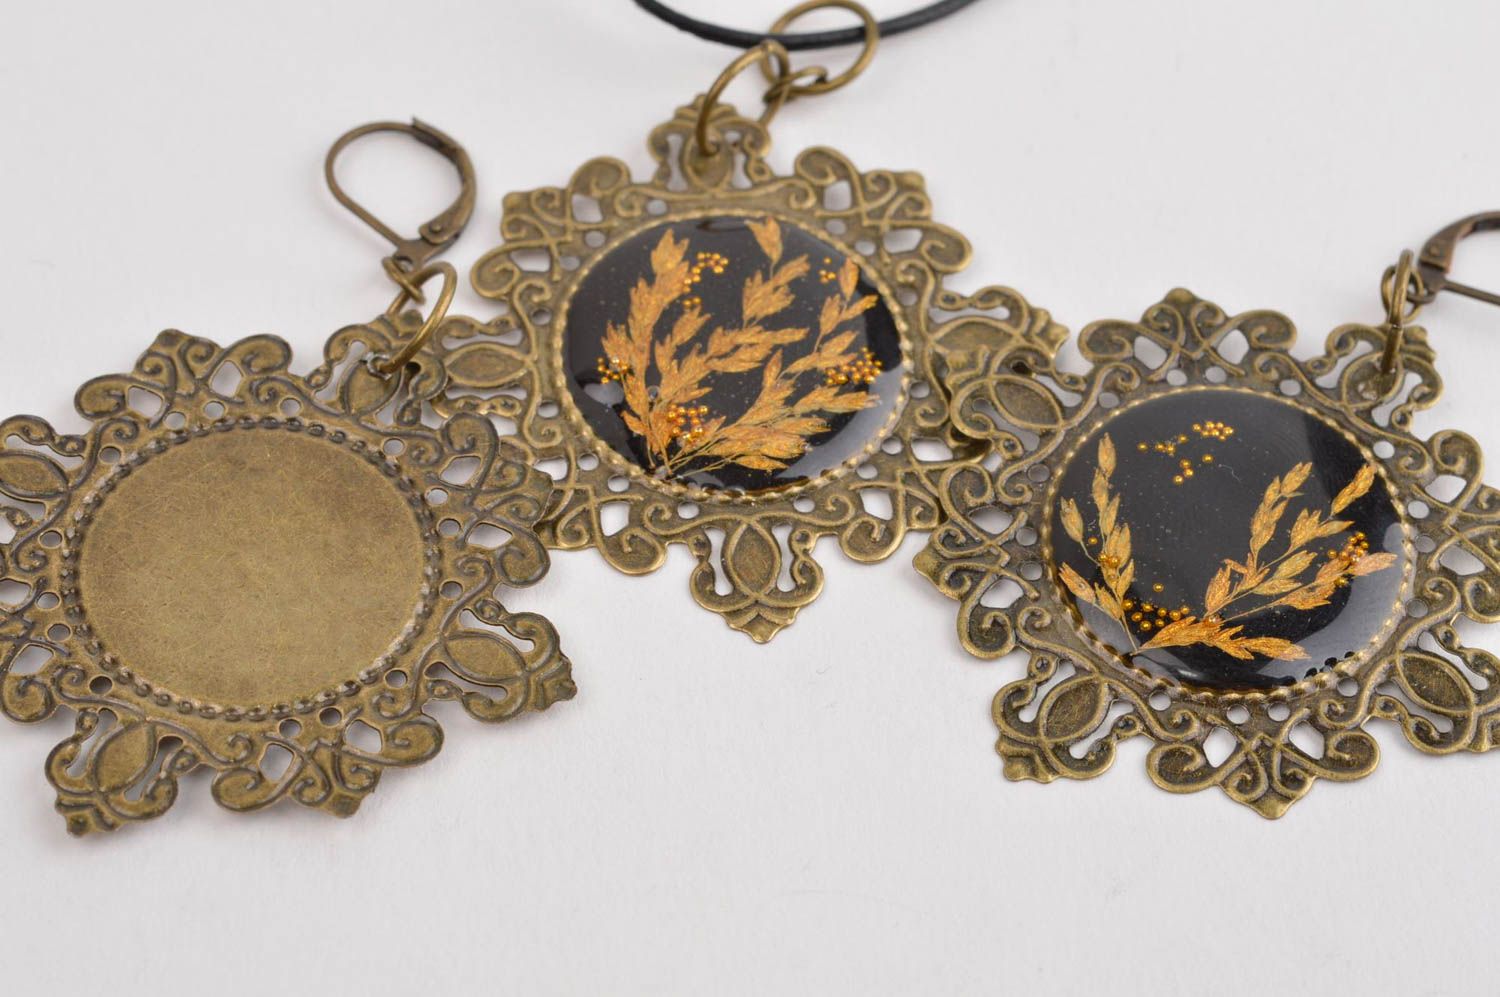 Handmade jewelry neck accessory unusual pendant epoxy resin jewelry gift ideas photo 4